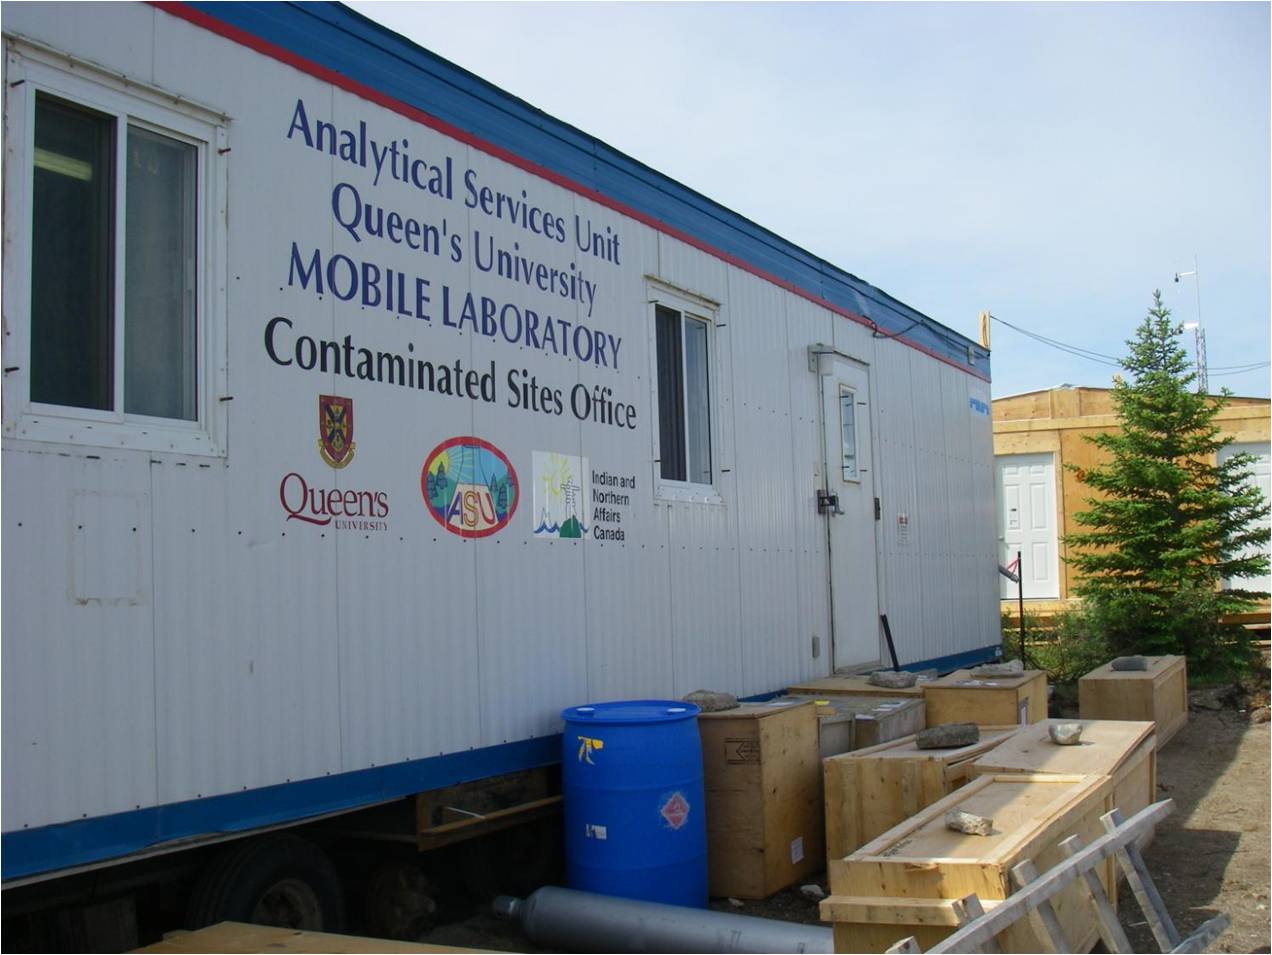 Winisk mobile laboratory trailer exterior